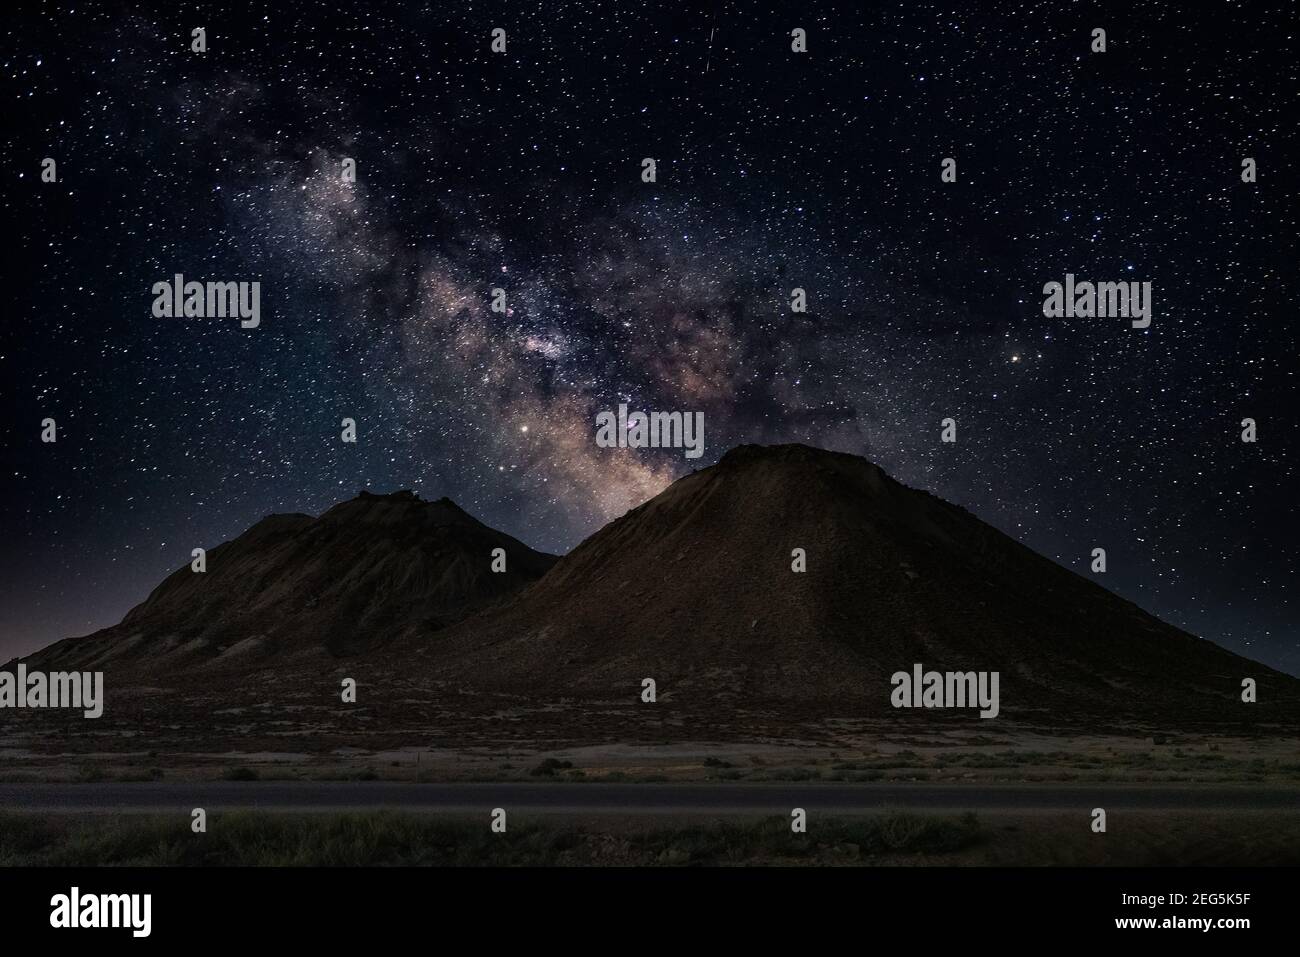 Milky way over hills, night landscape Stock Photo